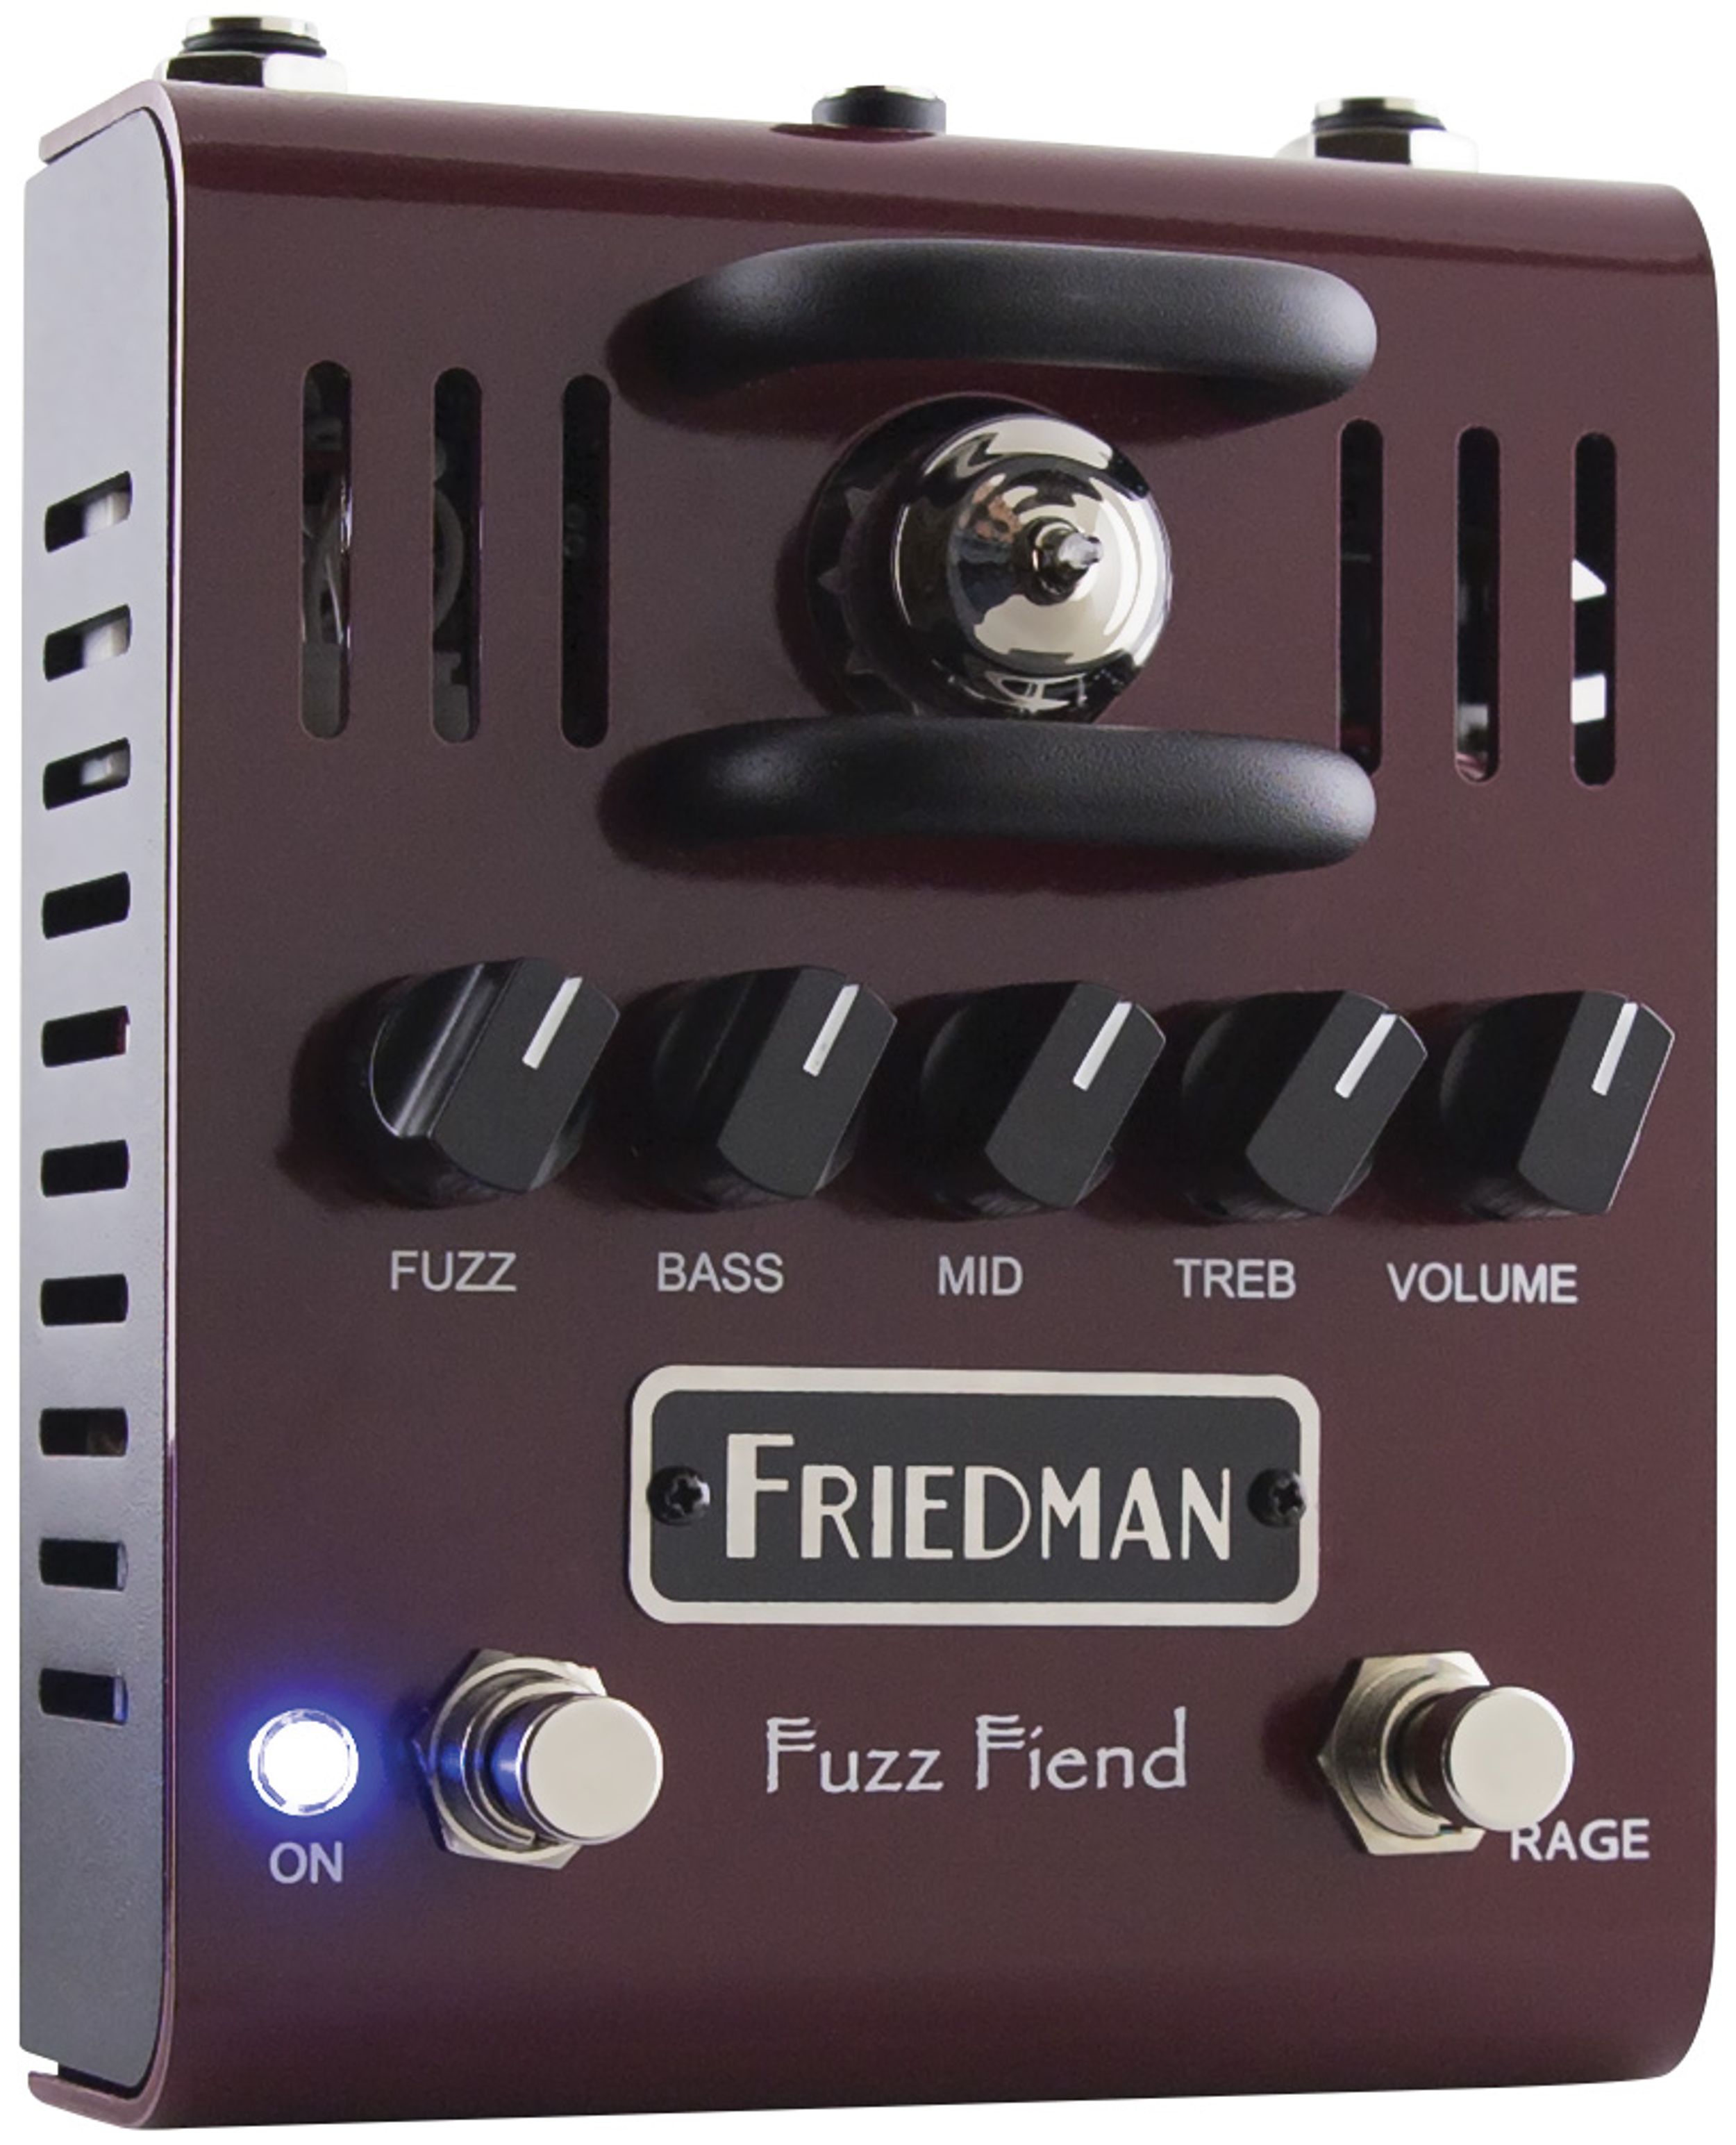 Friedman Fuzz Fiend Review